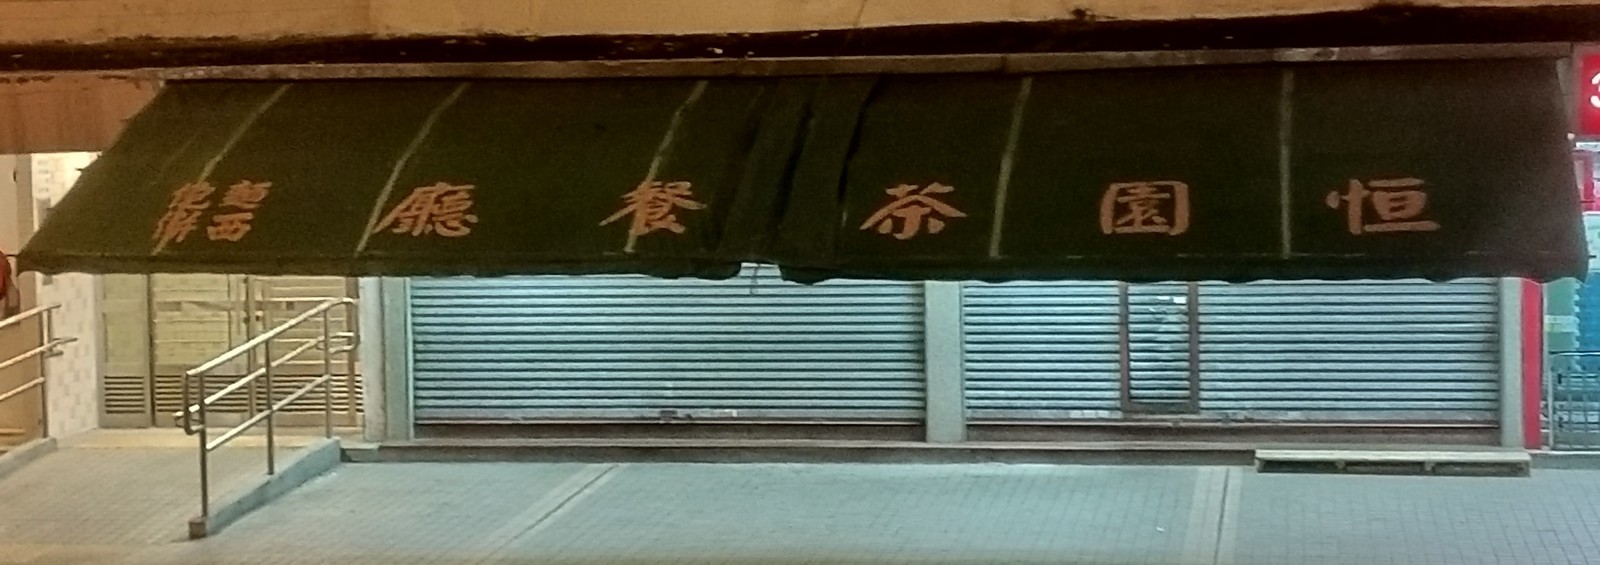 Hang Yuen Cafe sign